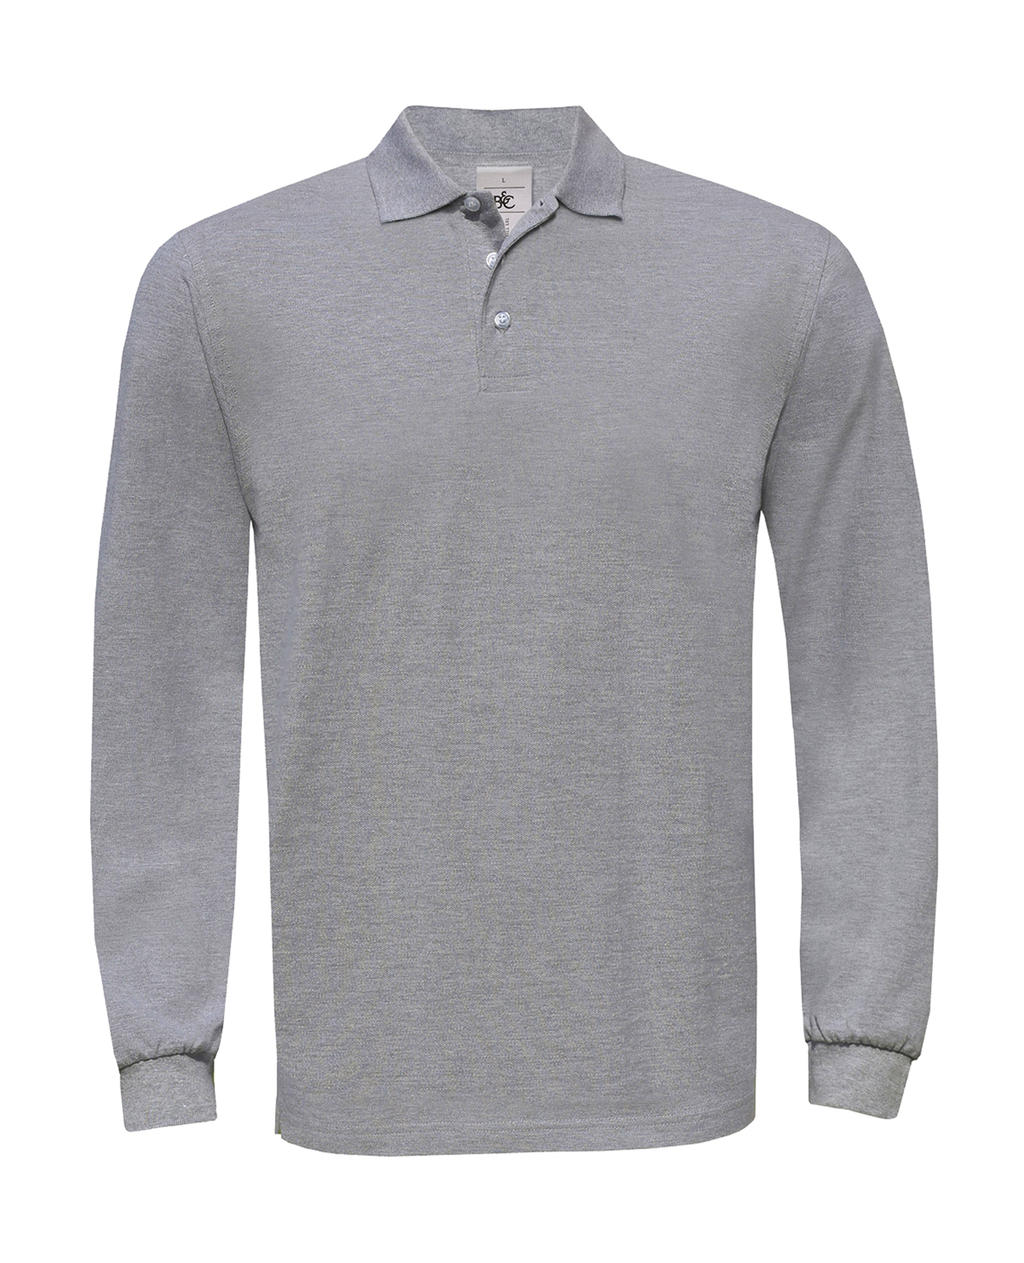 B&C Herren Poloshirt Polo Shirt Polohemd T-Shirt langarm Shirt